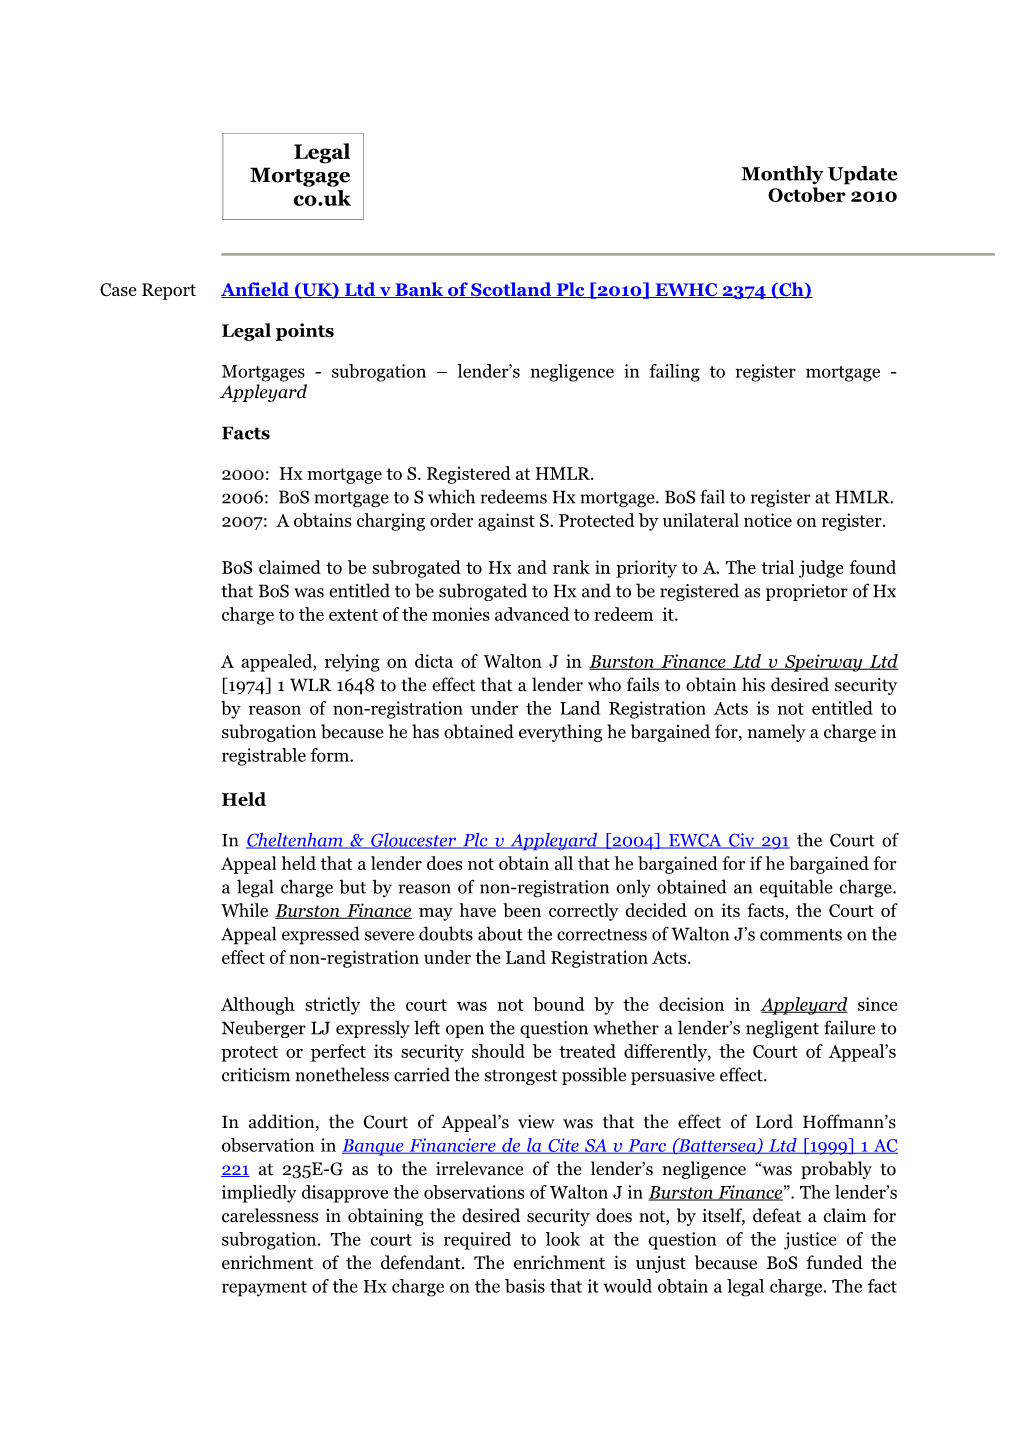 Case Report Anfield (UK) Ltd V Bank of Scotland Plc 2010 EWHC 2374 (Ch)